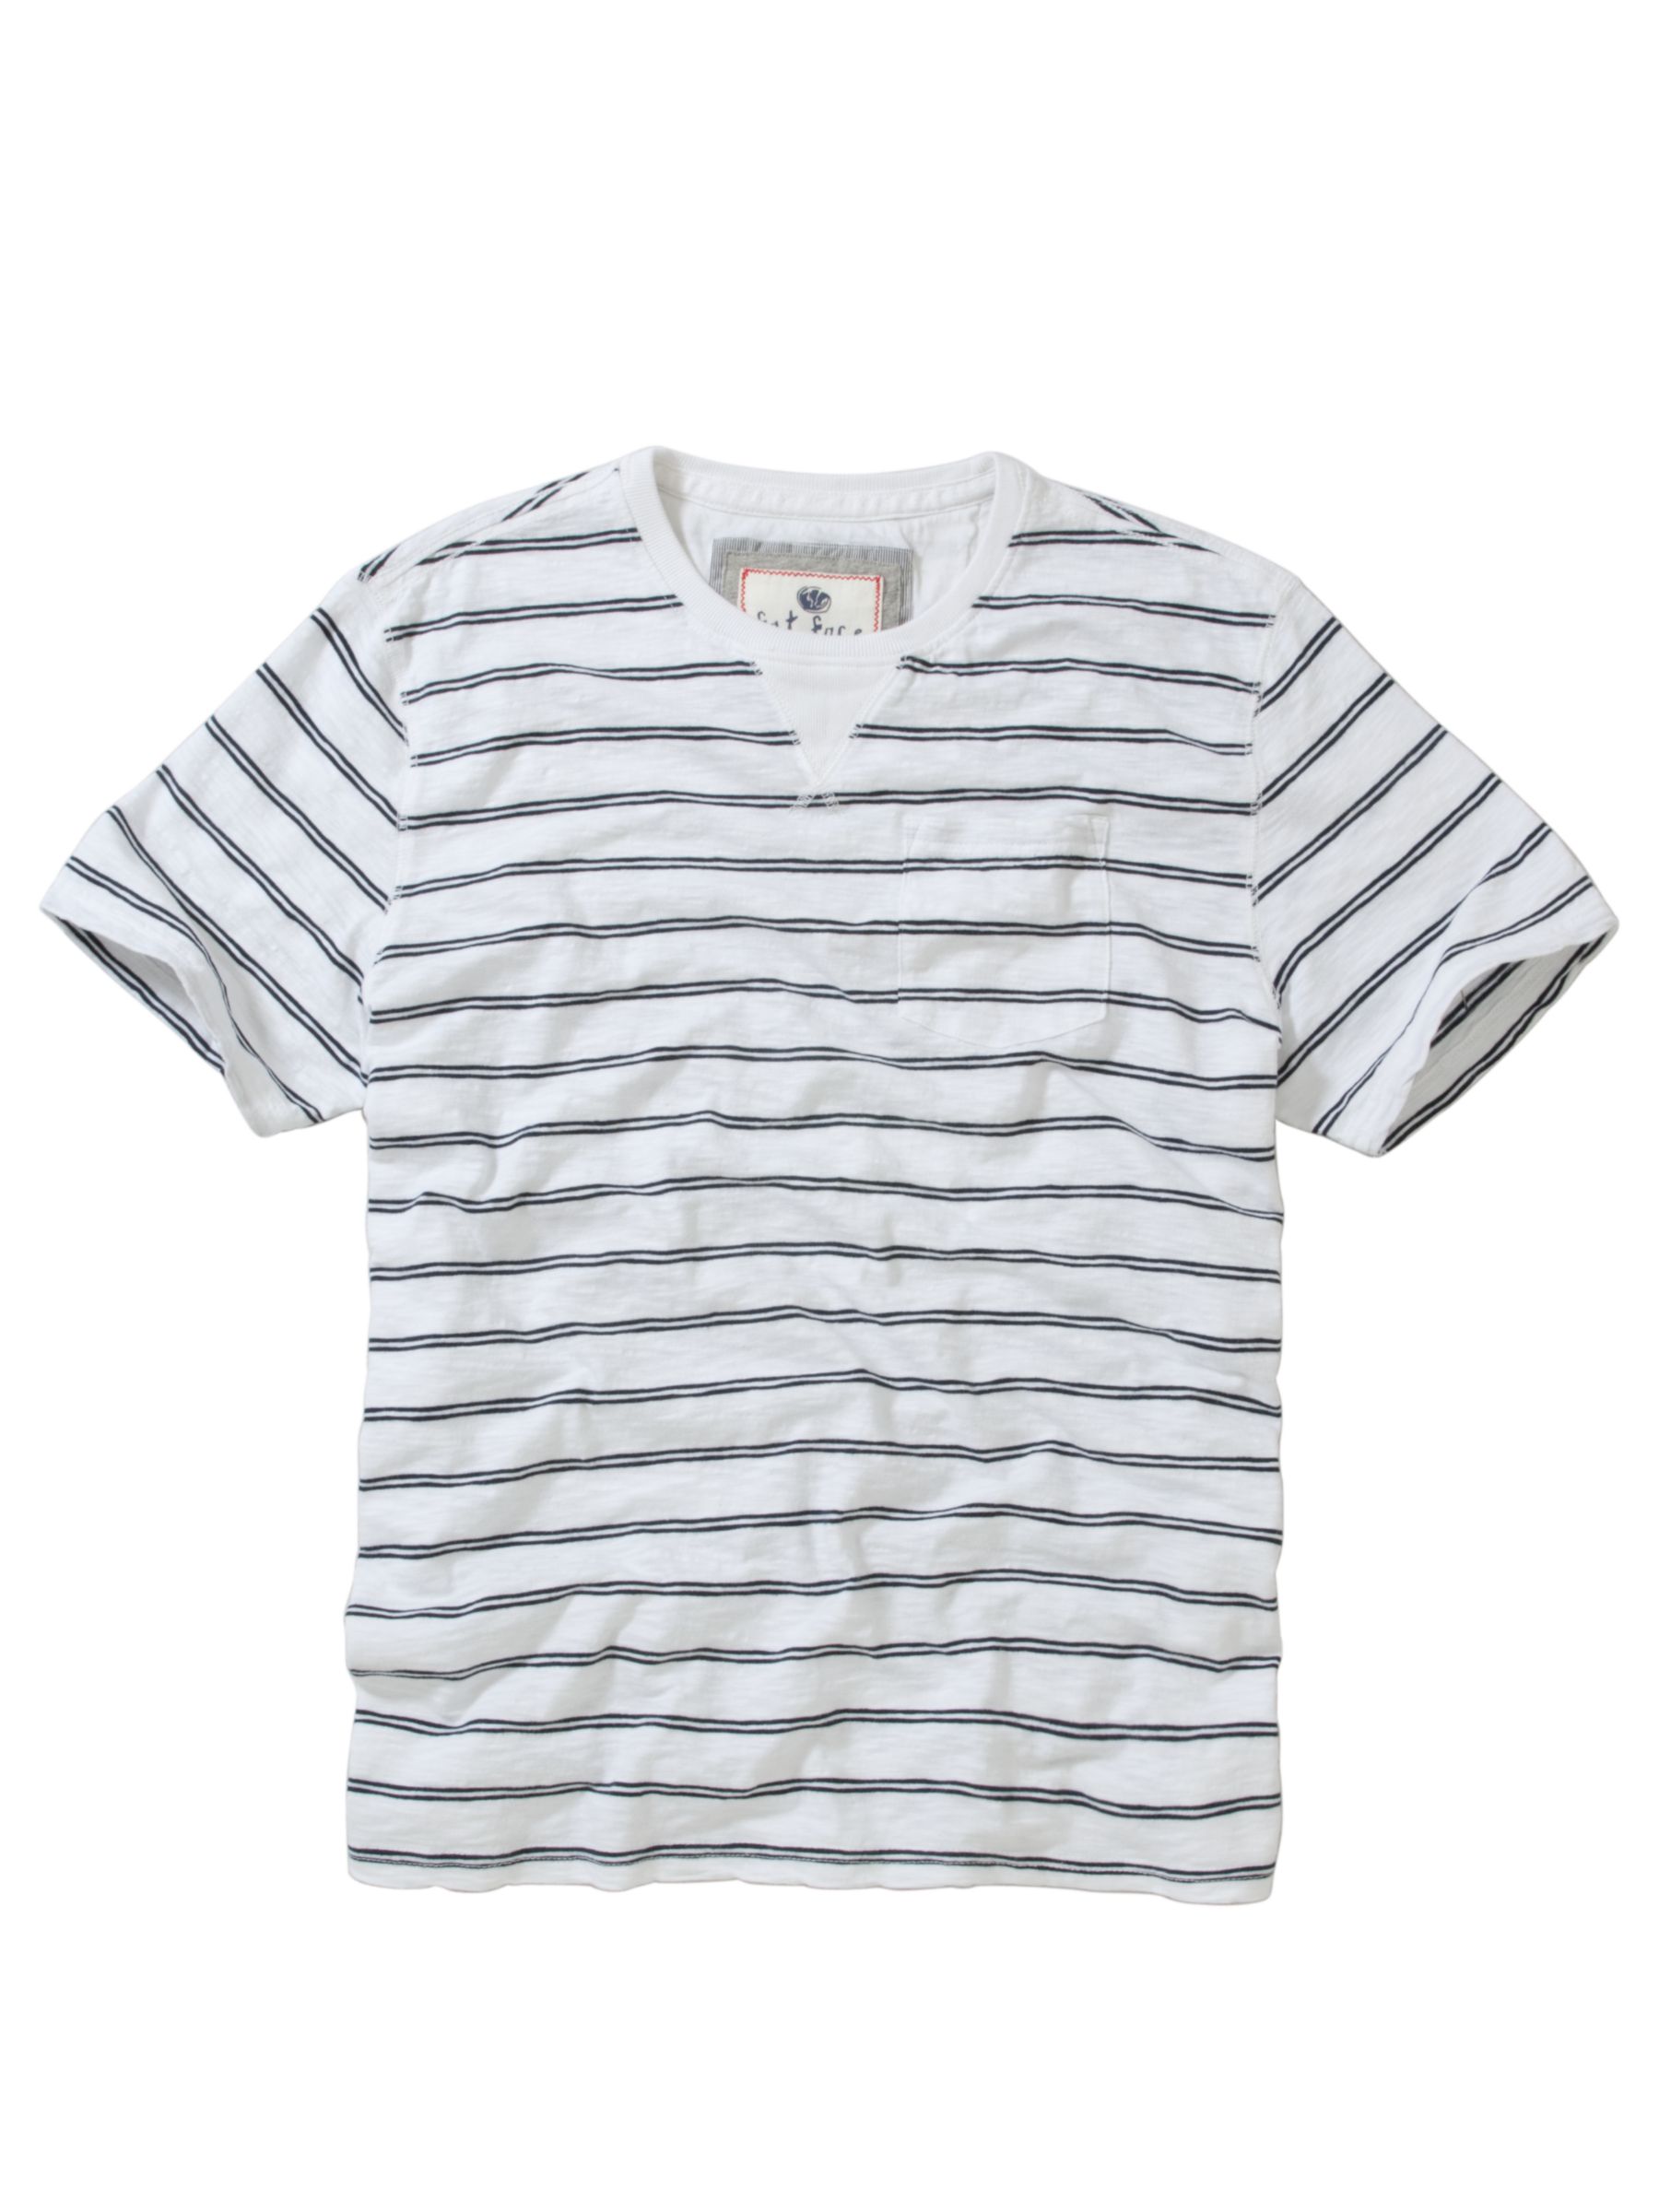 Fat Face Water Stripe T-Shirt, White